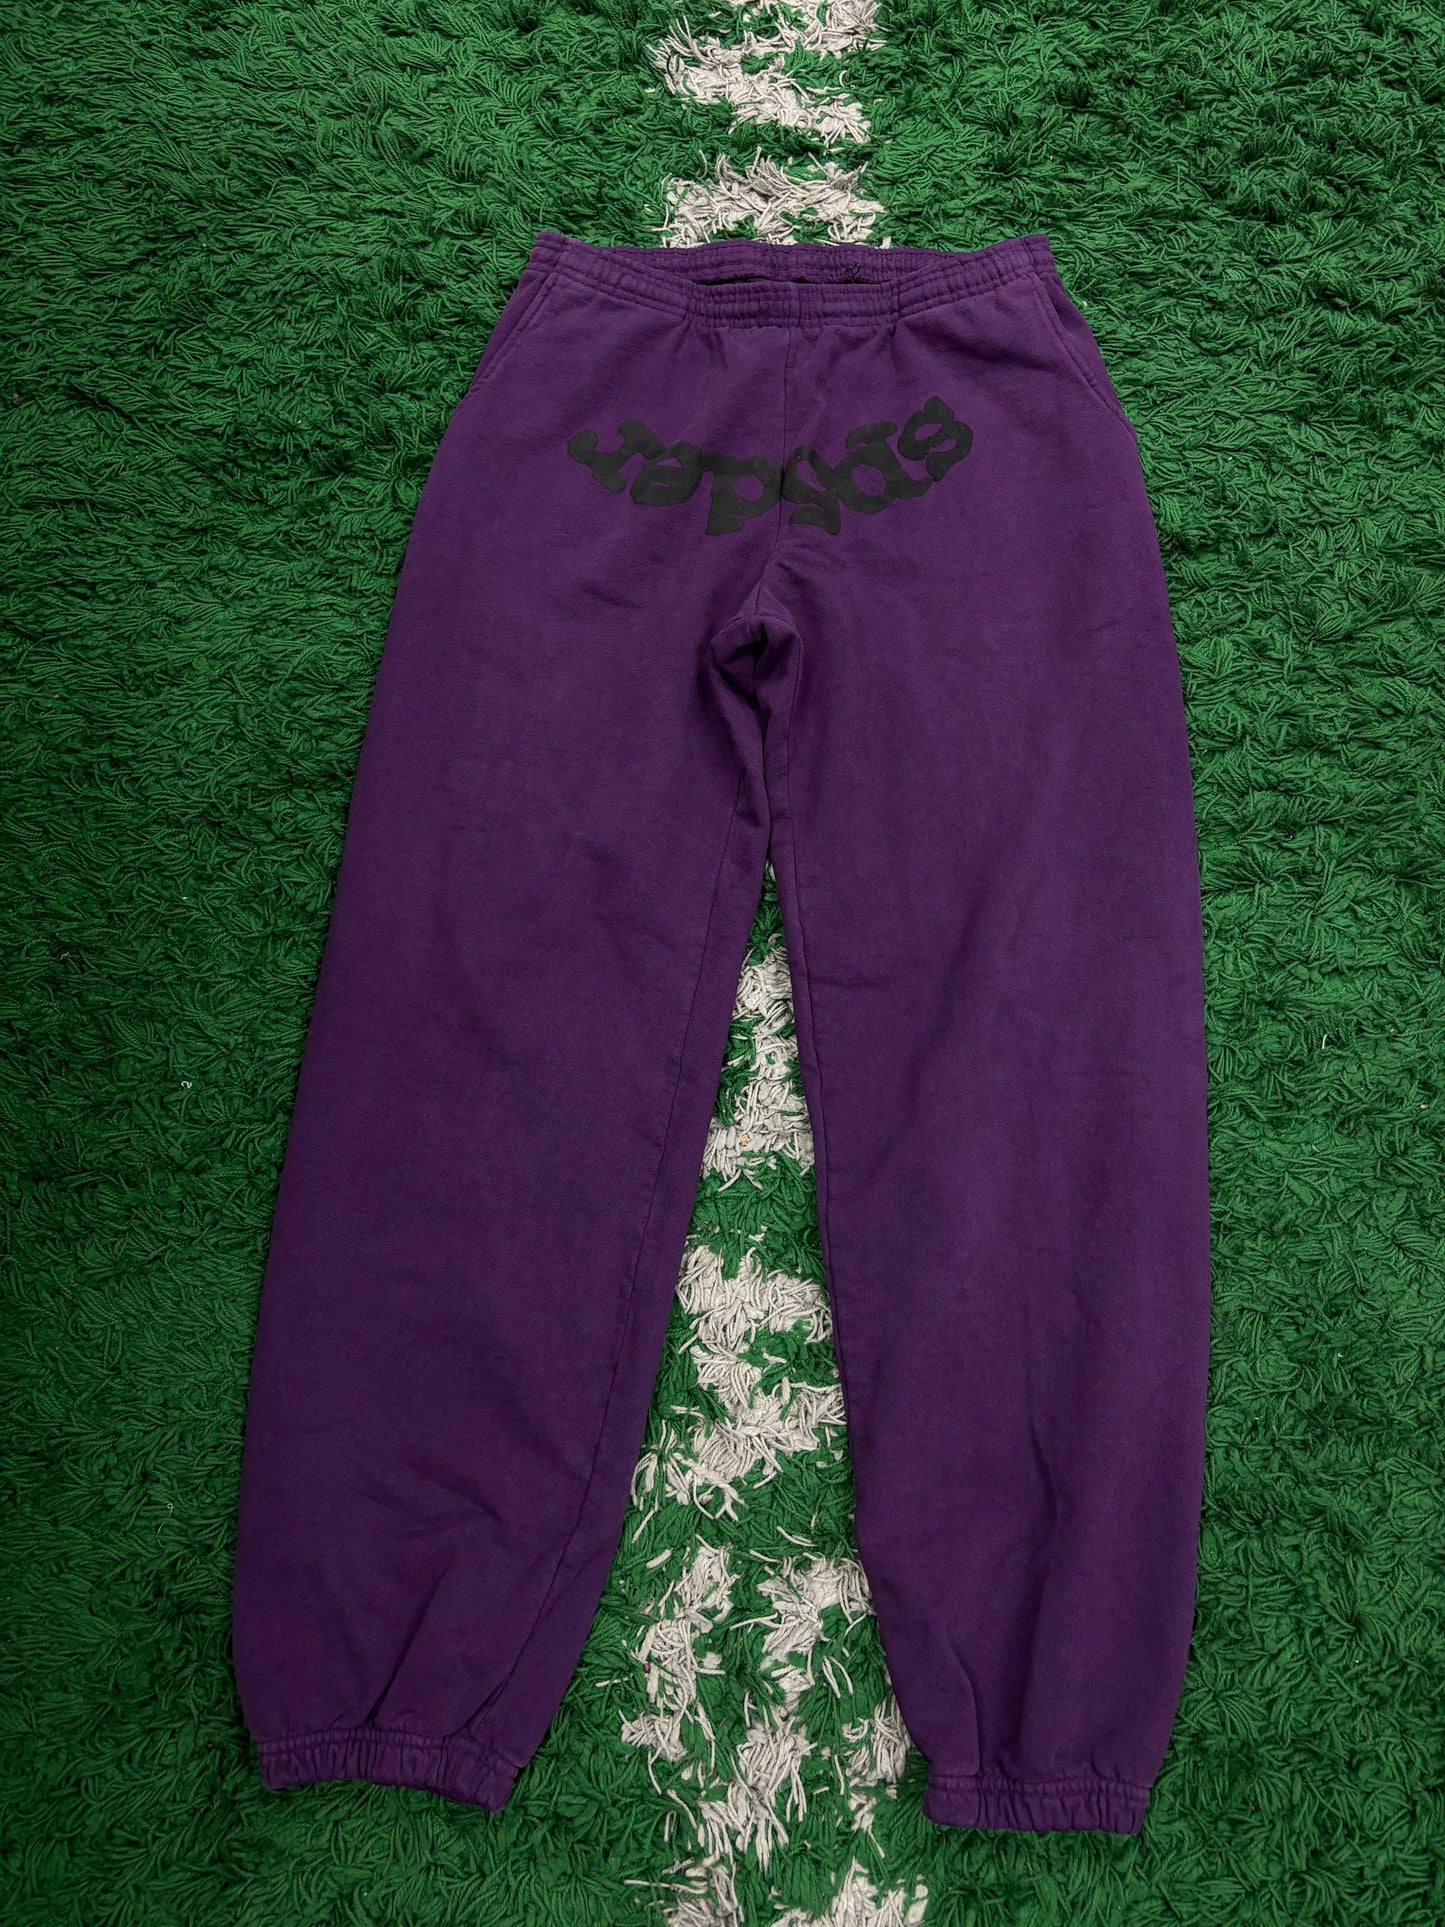 Sp5der Sweats Purple Black size:Large Used